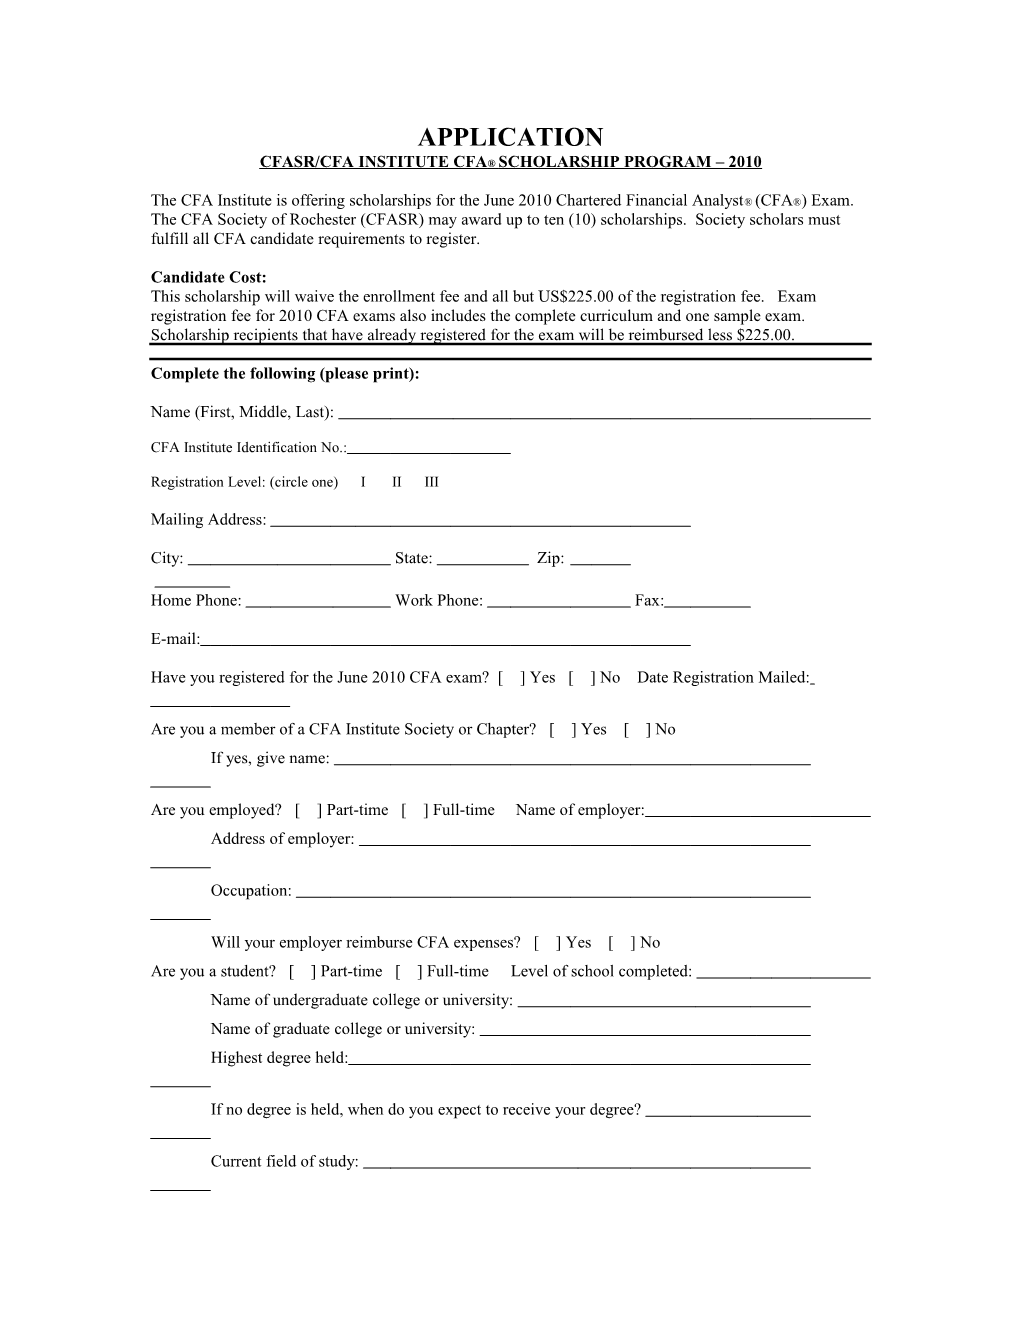 June 2008 CFA Exam Scholarship Application